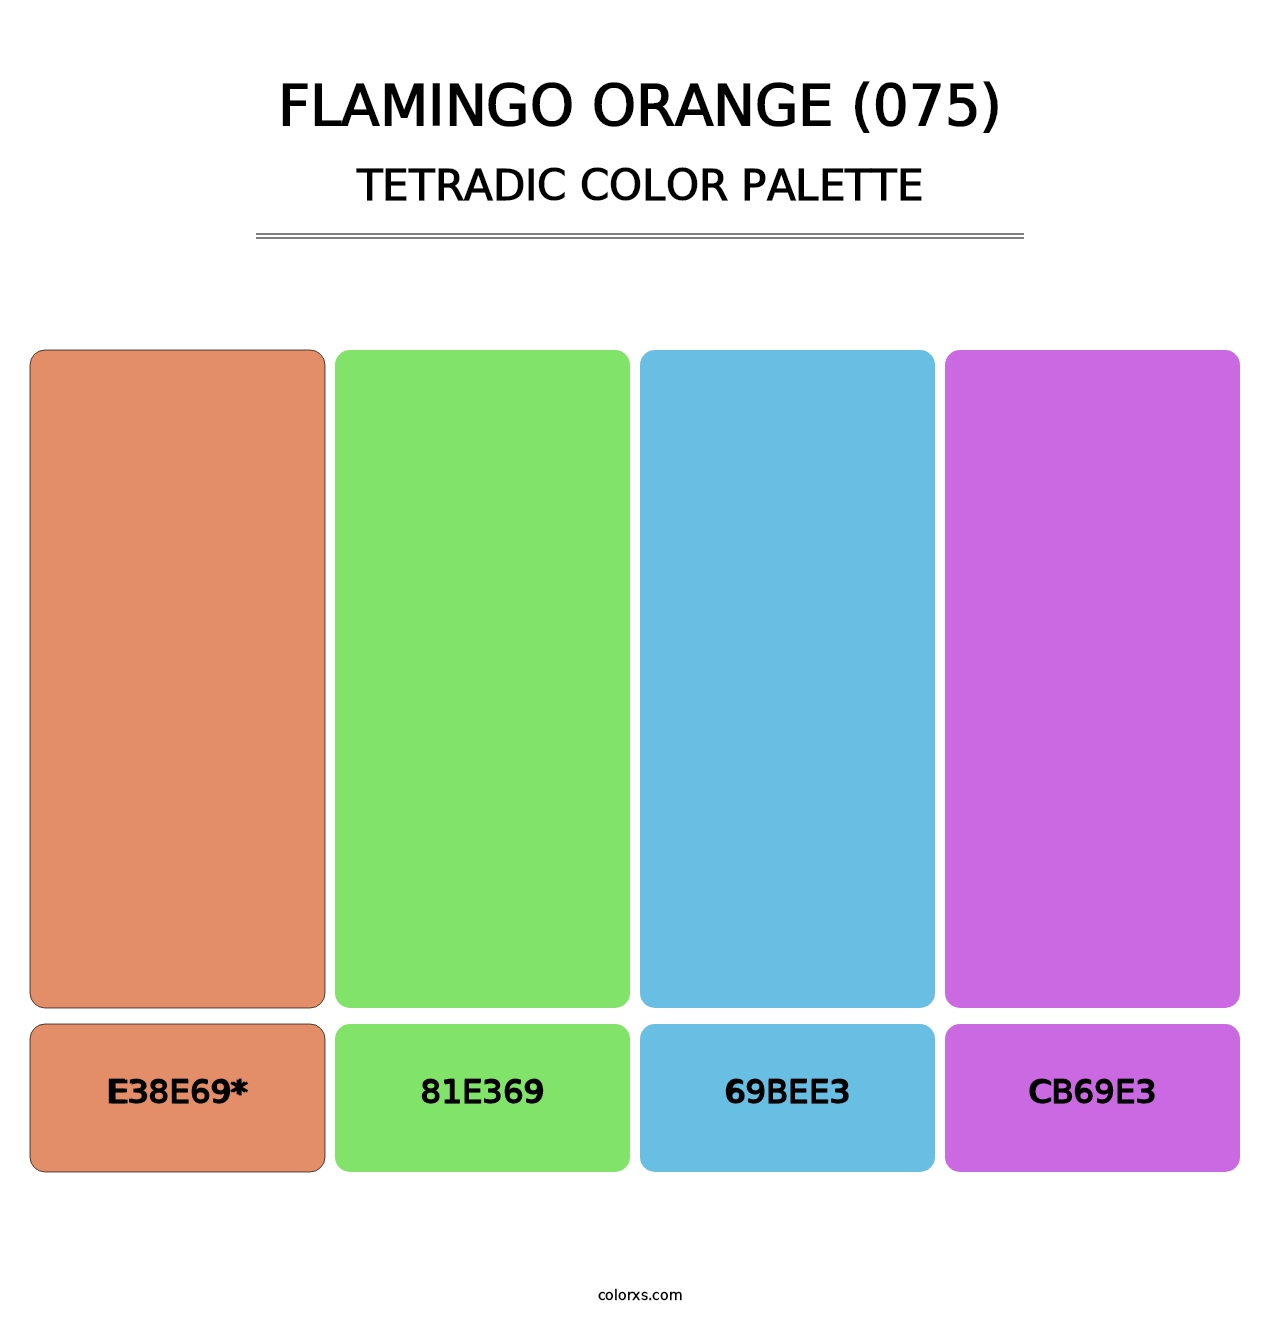 Flamingo Orange (075) - Tetradic Color Palette